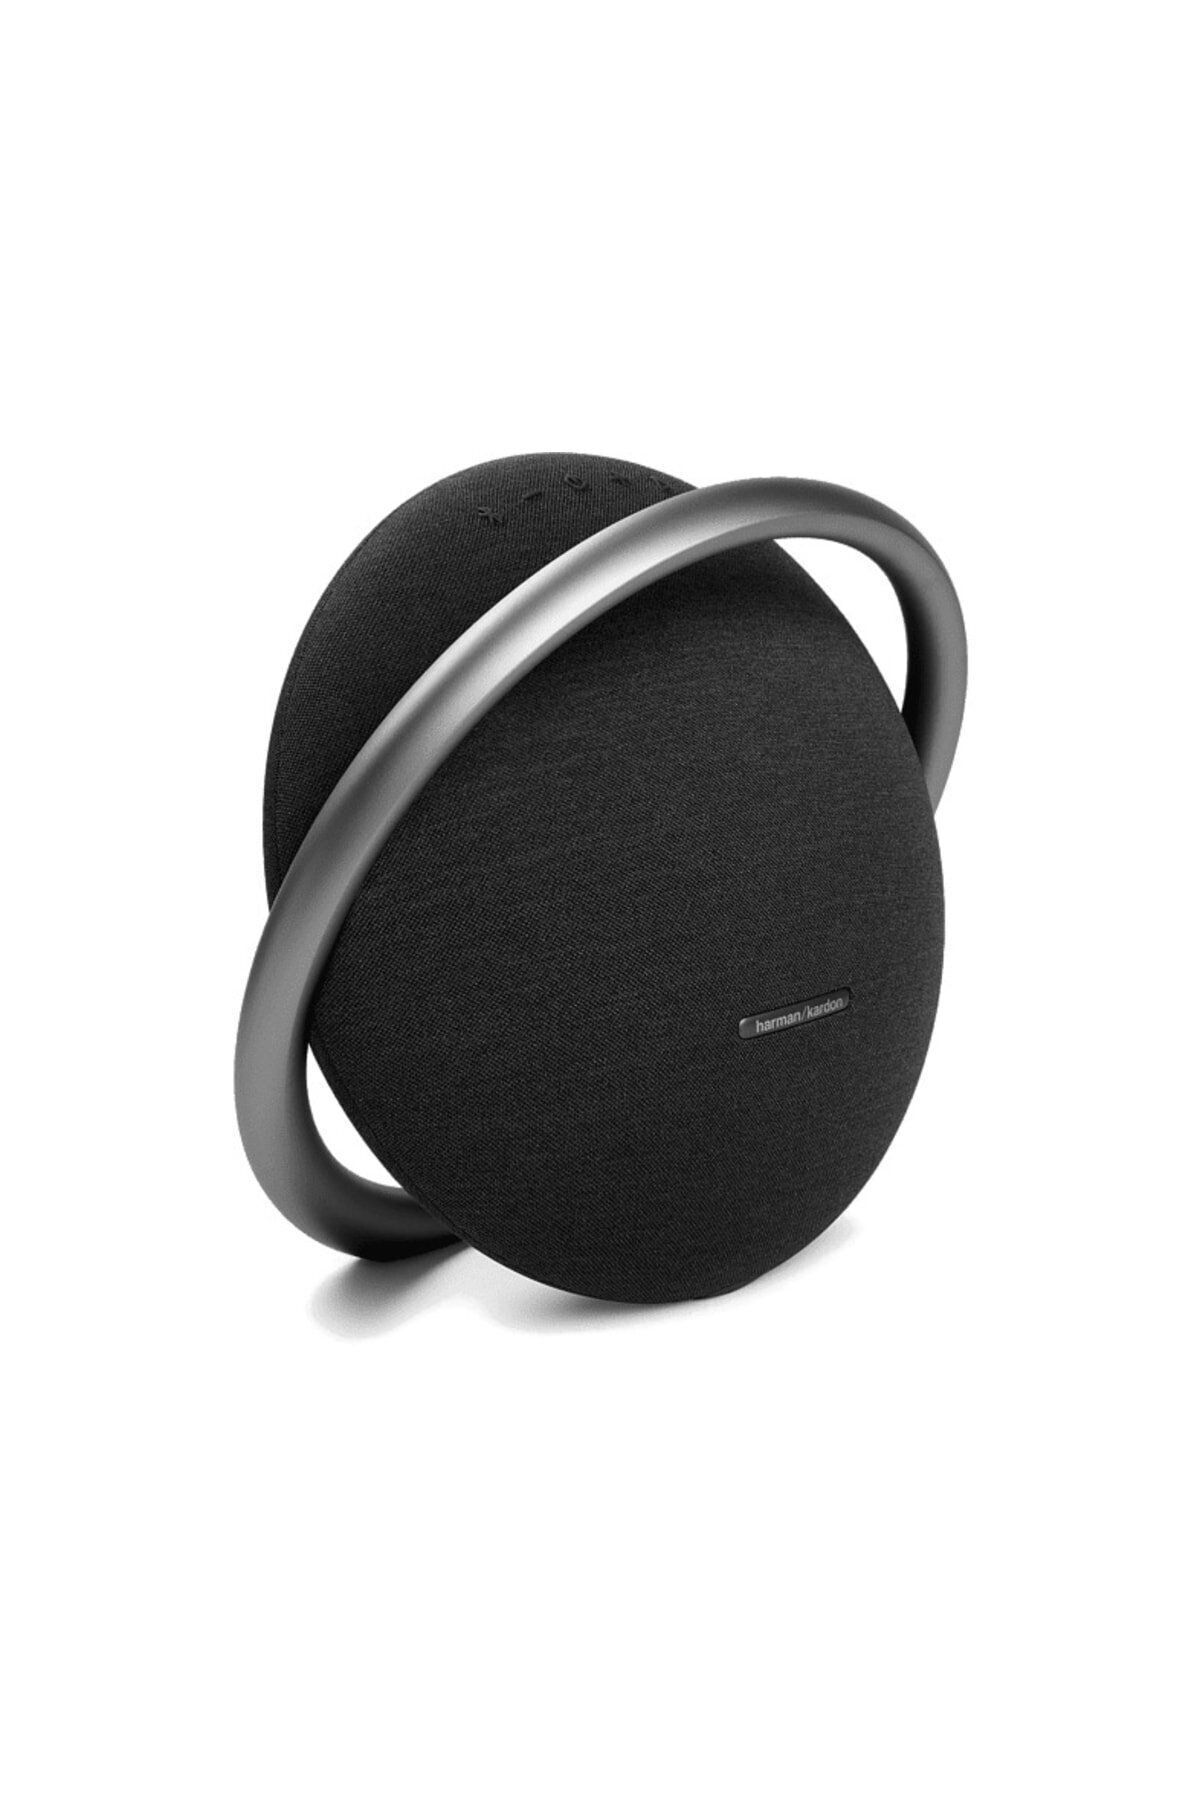 Harman Kardon Onyx Studio 7 Siyah Taşınabilir Bluetooth Hoparlör